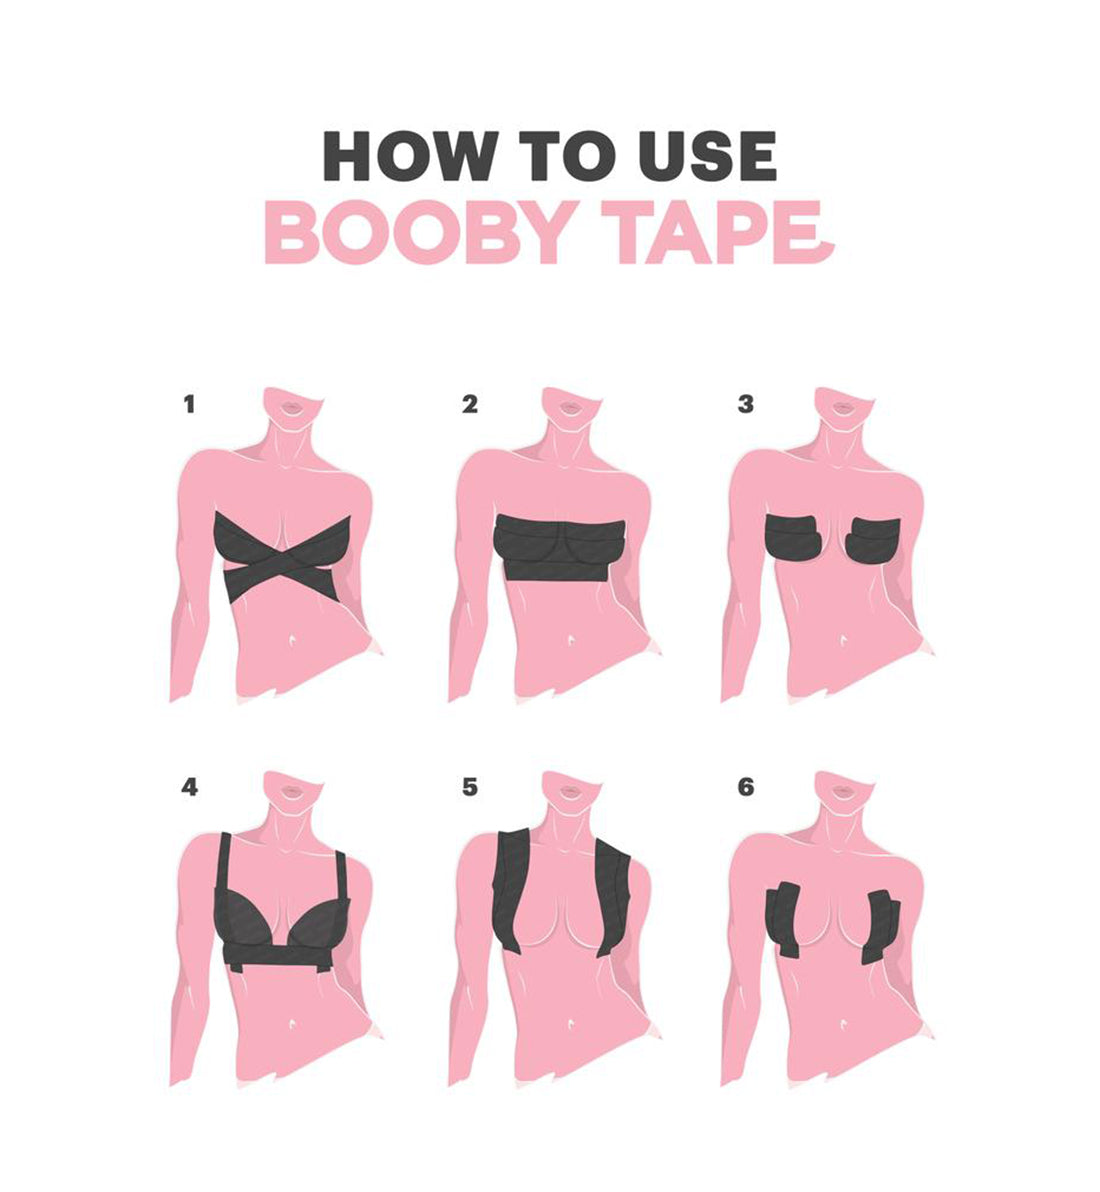 BOOBY TAPE The Original Breast Tape,5 m,White - White,One Size